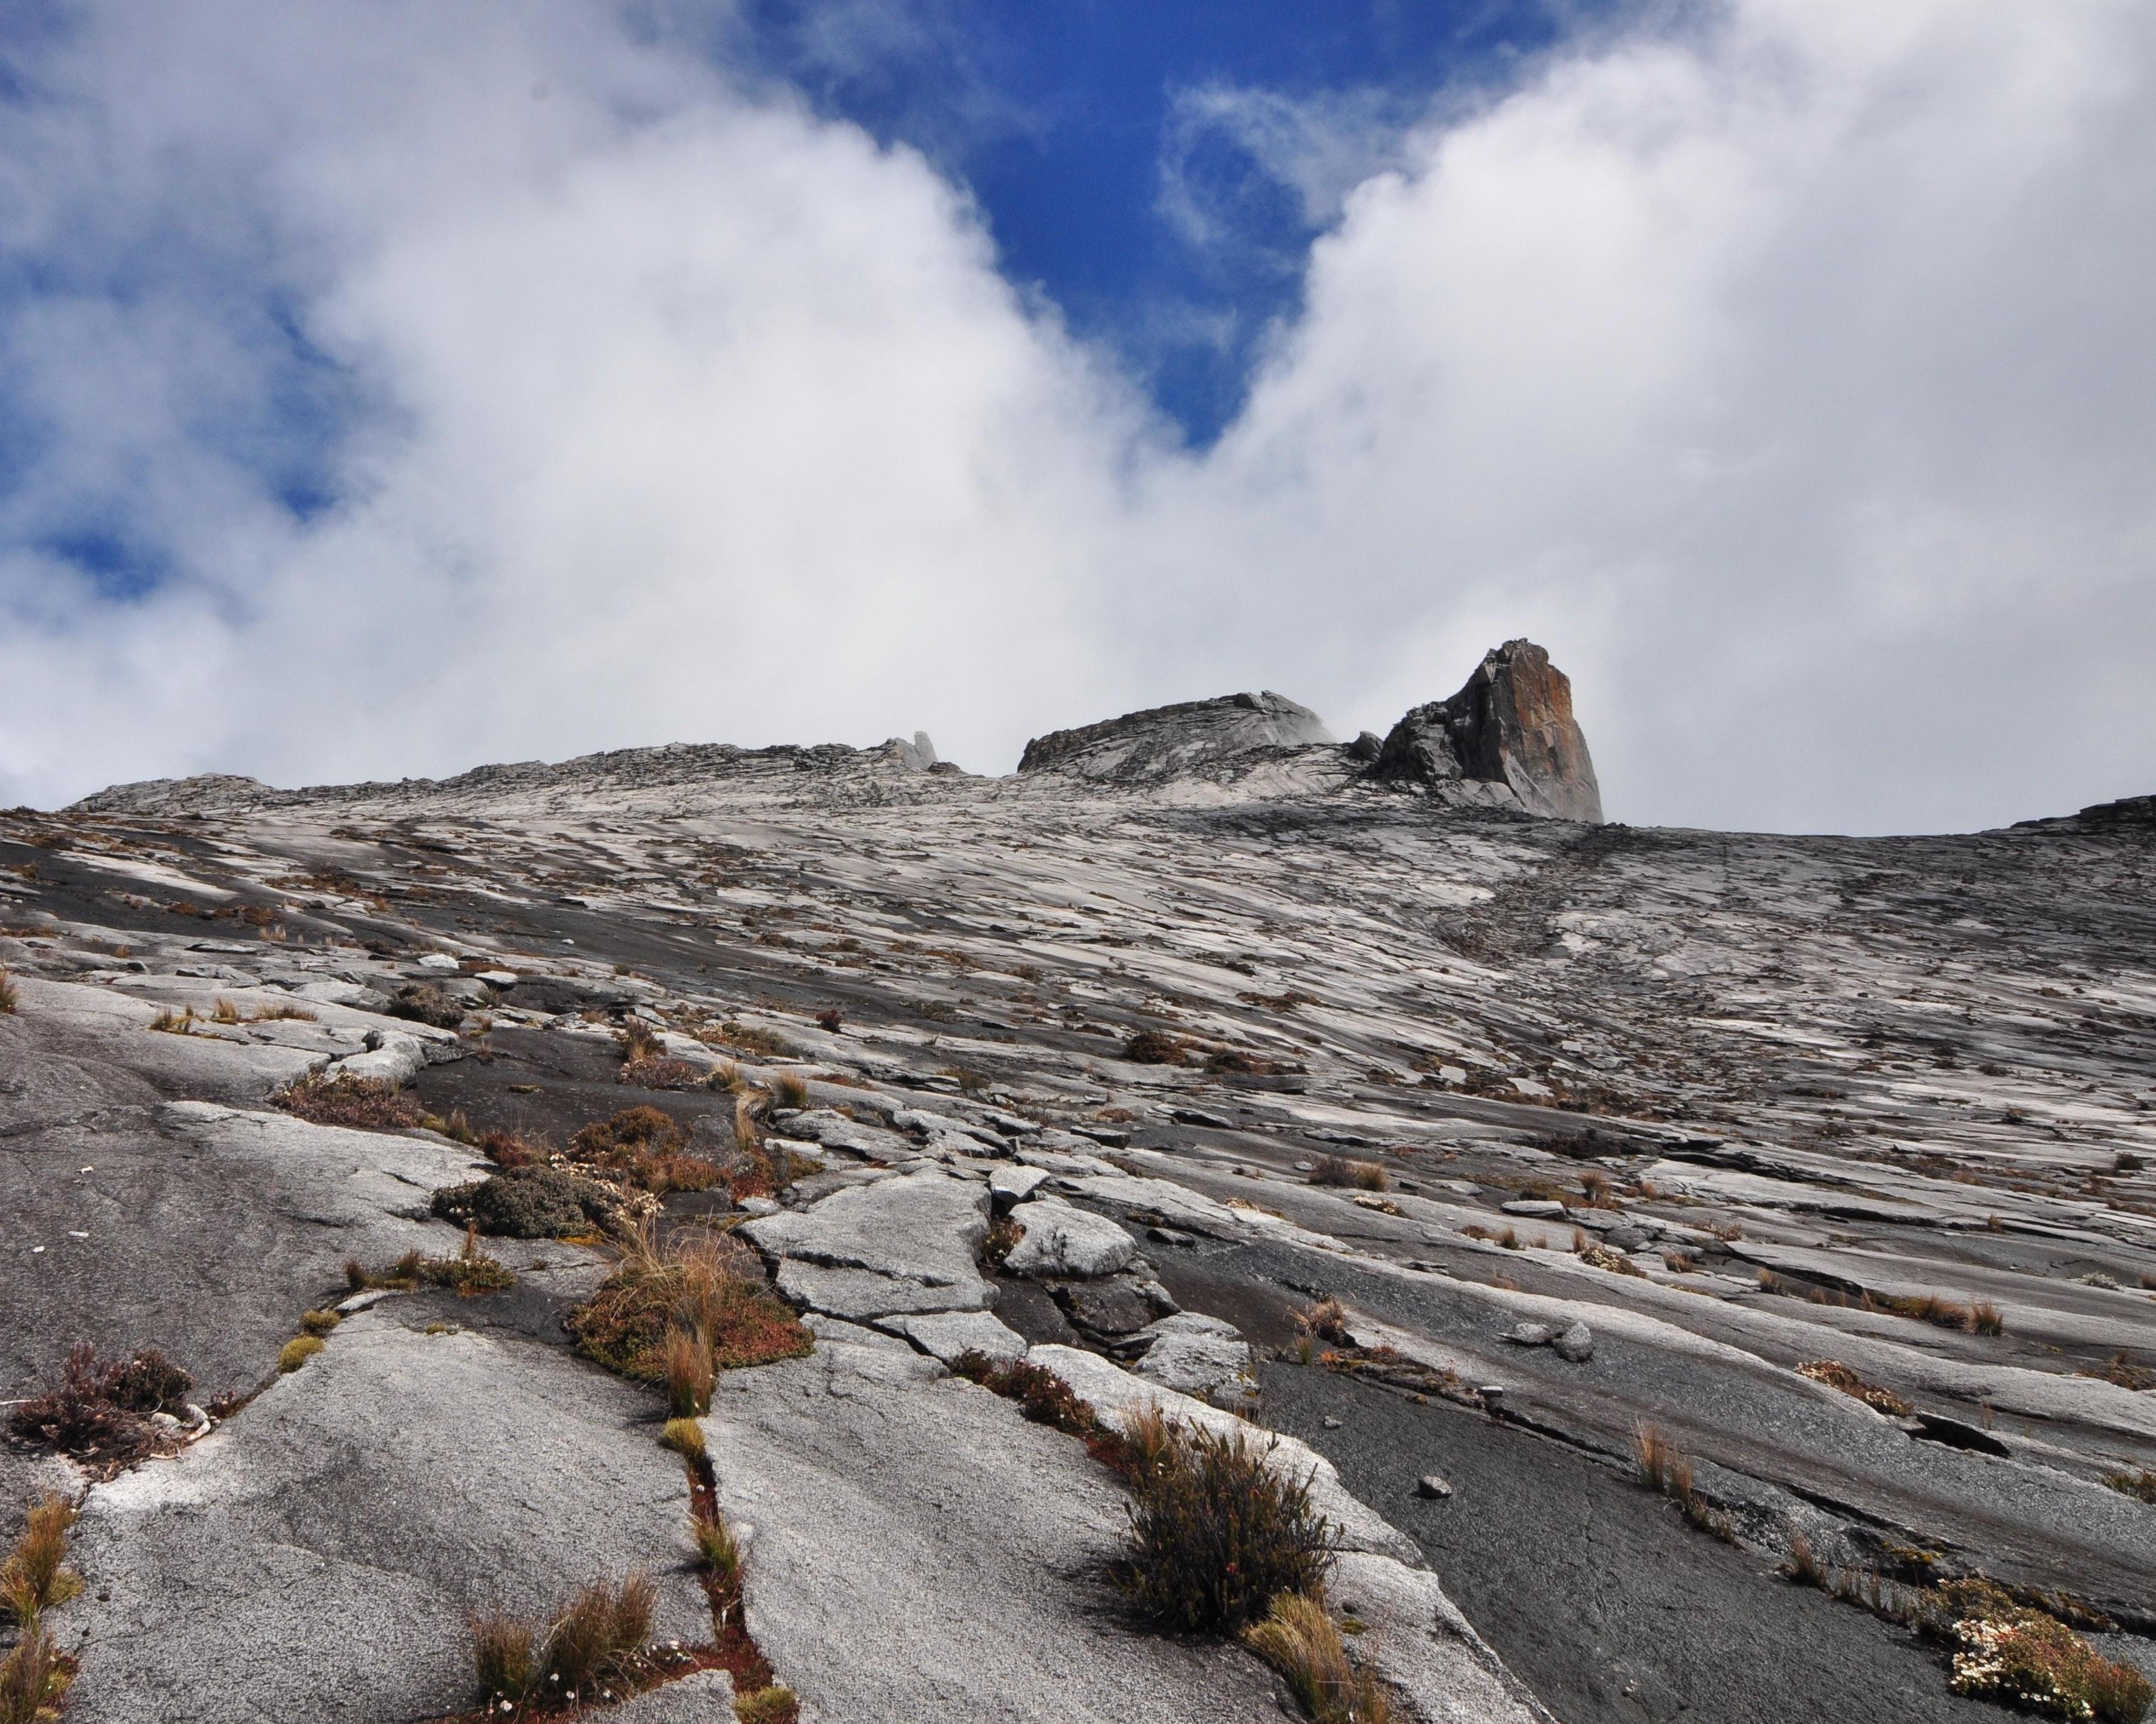 Gruppentour "Mount Kinabalu"